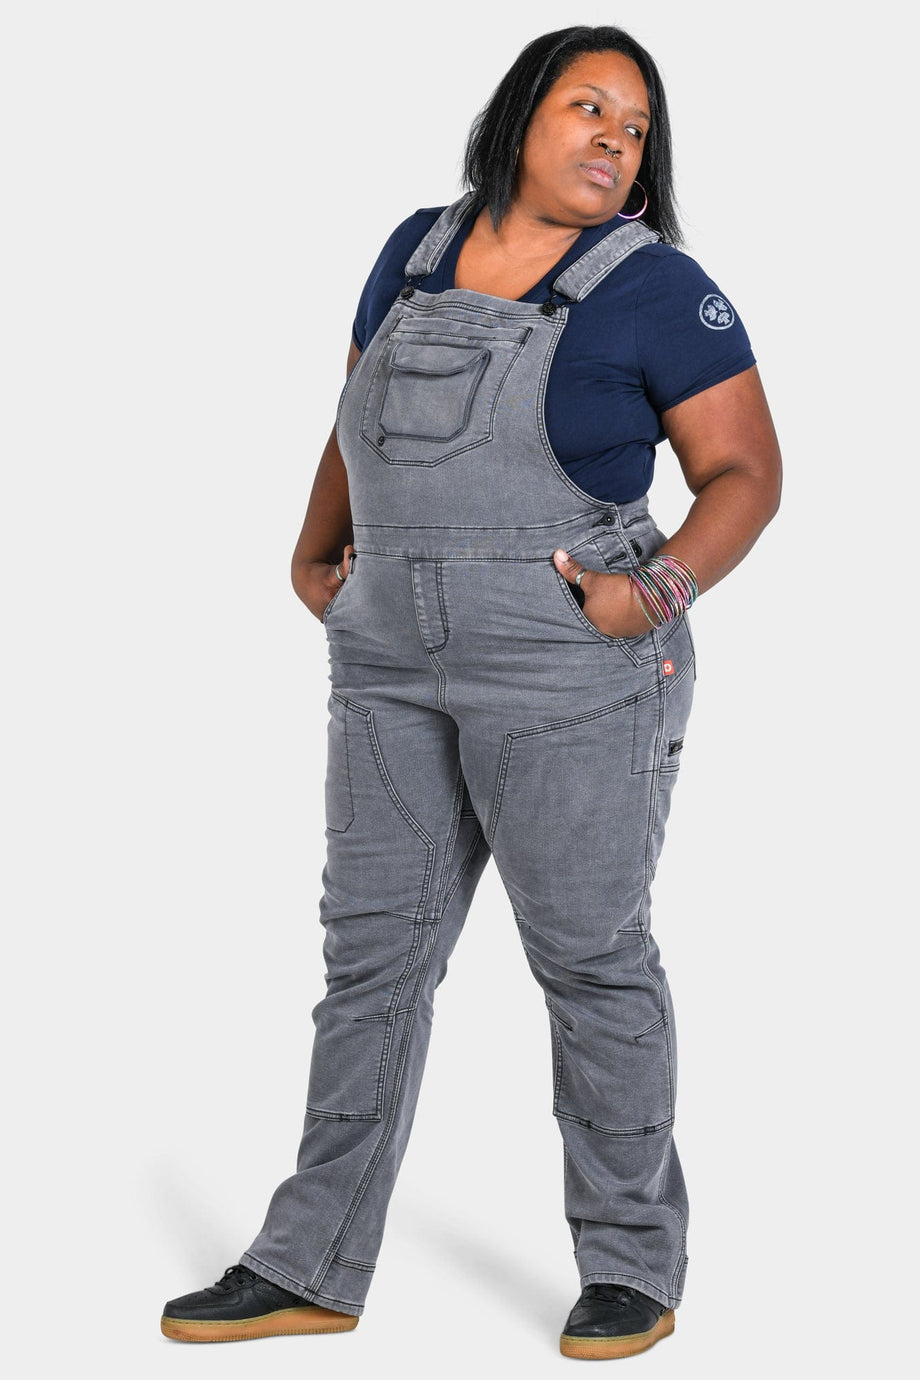 Agnes Orinda Women's Plus Size Overall Adjustable Straps Denim Bib Jumper  With Pockets Dark Blue 4x : Target